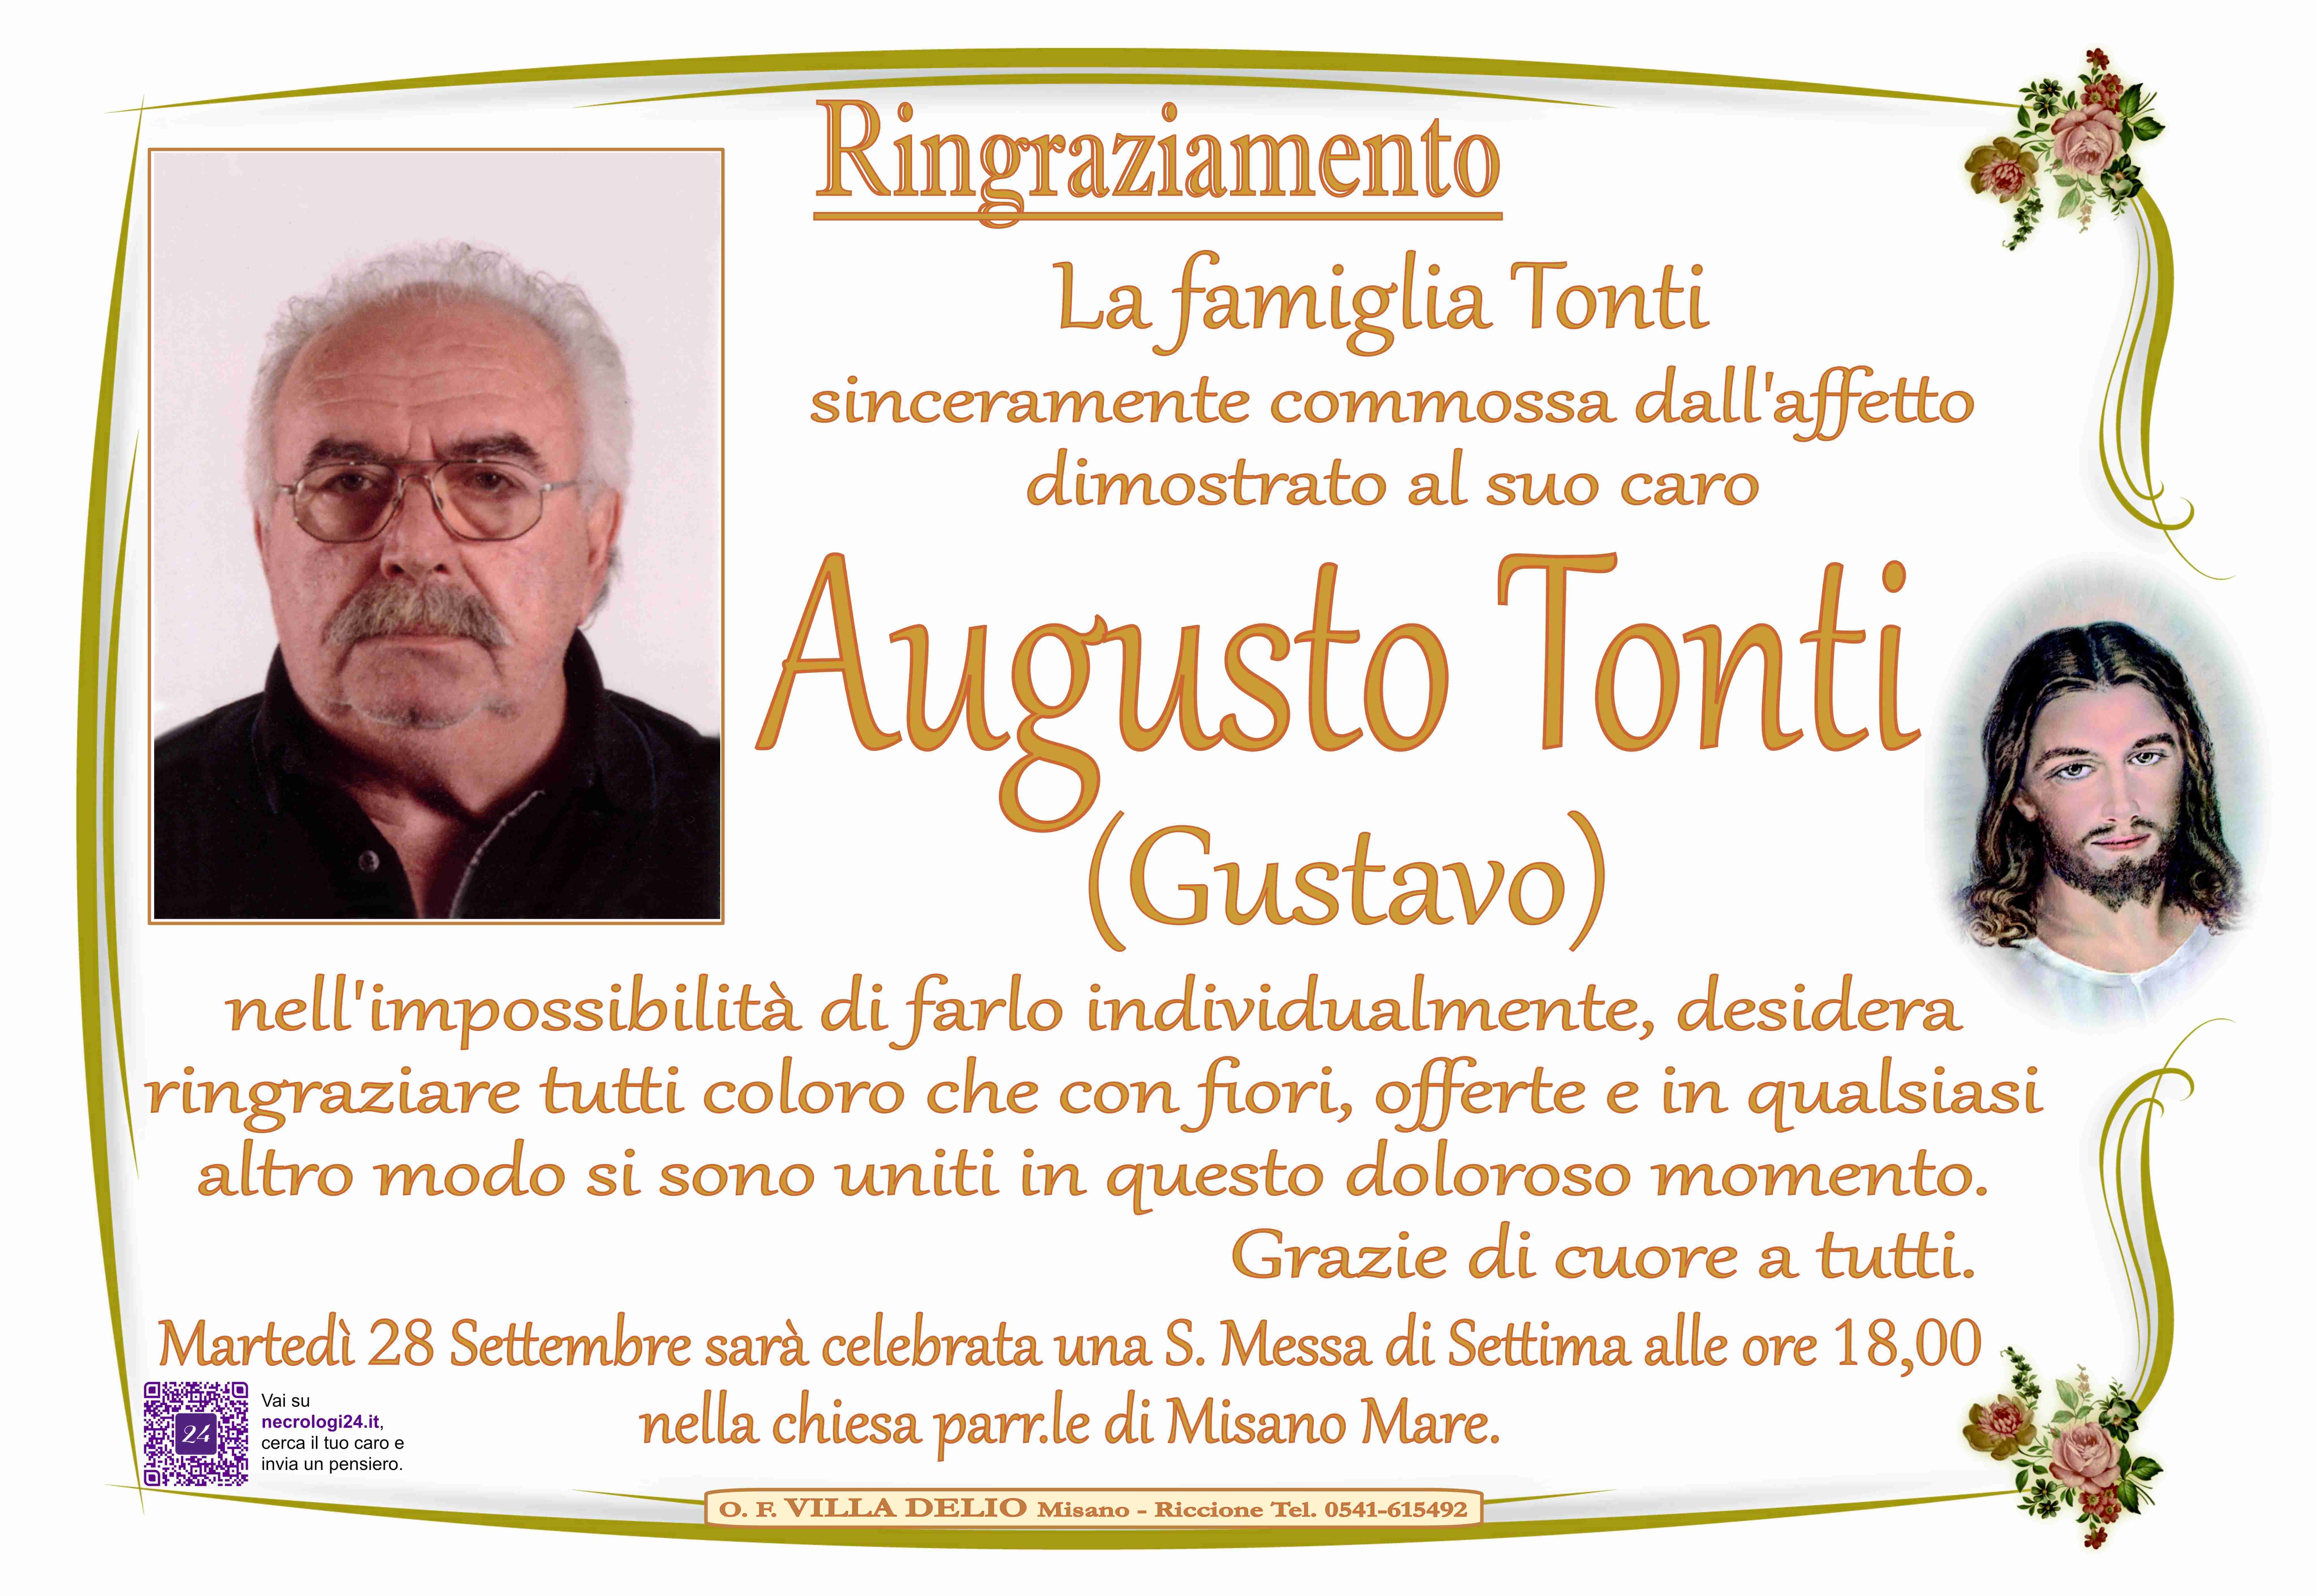 Augusto (Gustavo) Tonti